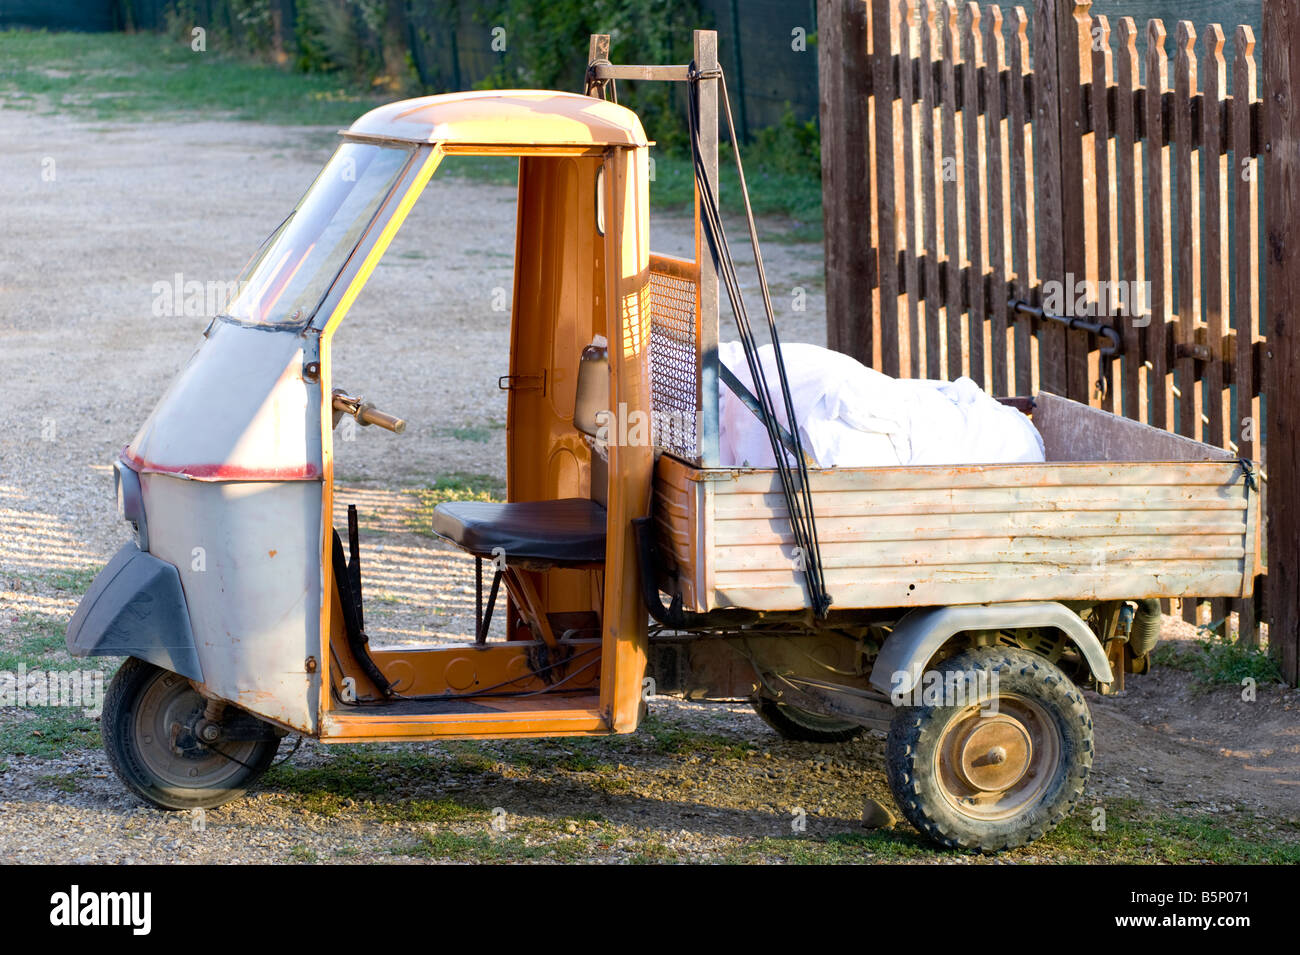 Well used Ape three wheeled utility vehicle in Tuscan village, near Monte San Savino, Italy. Stock Photo